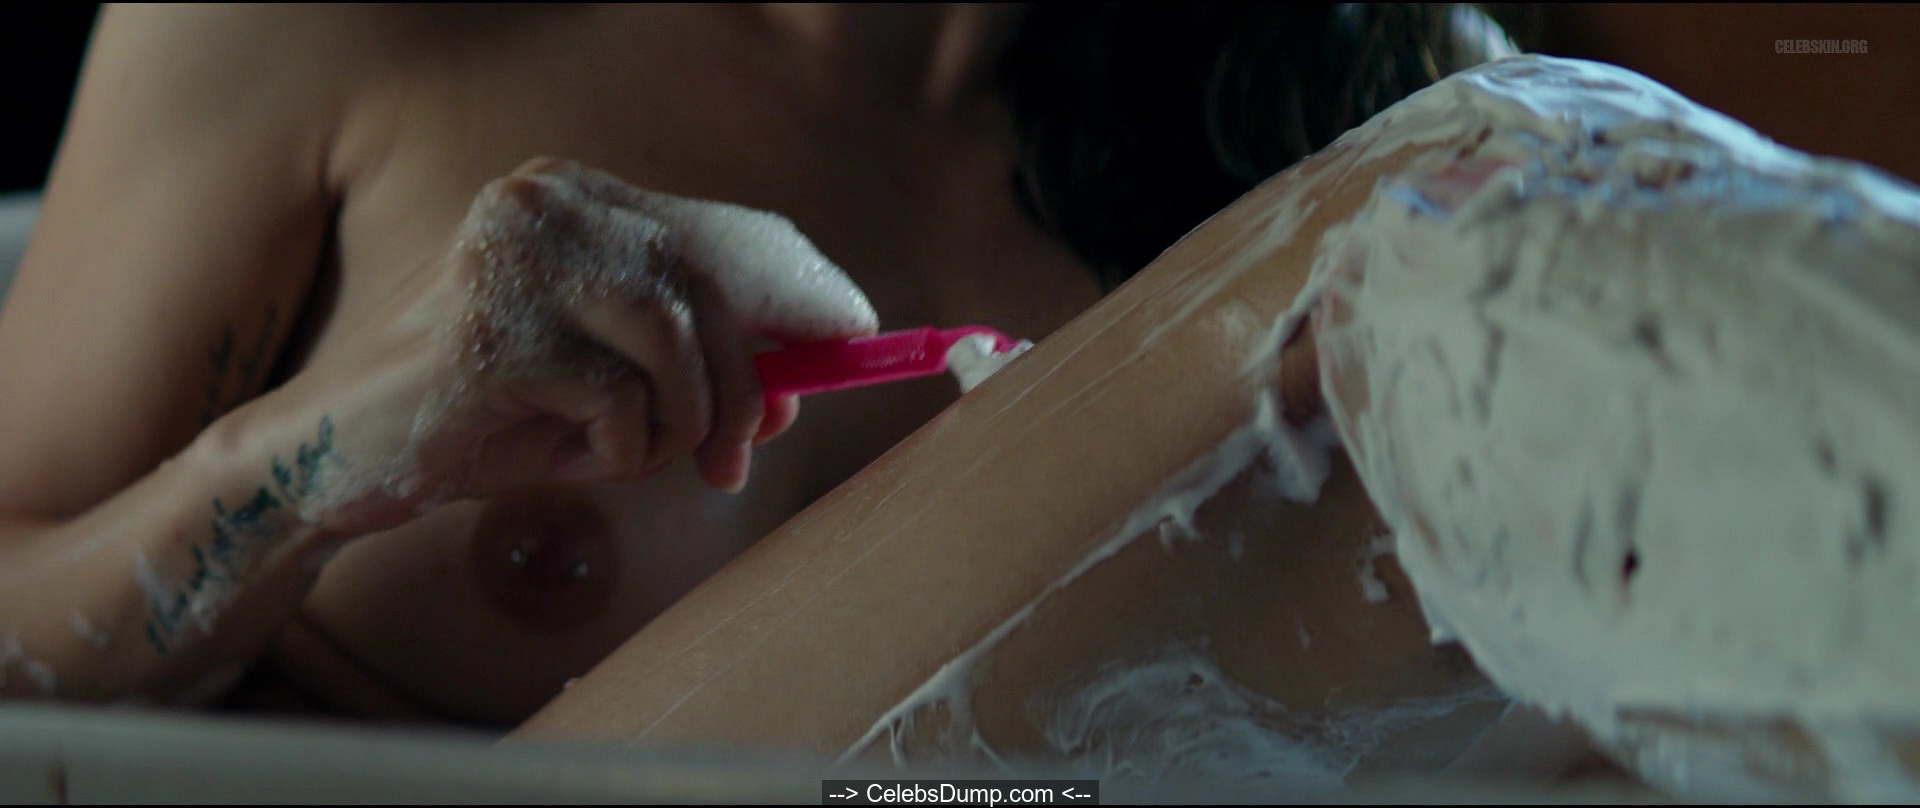 Nadine Crocker nude in sex movie scenes.